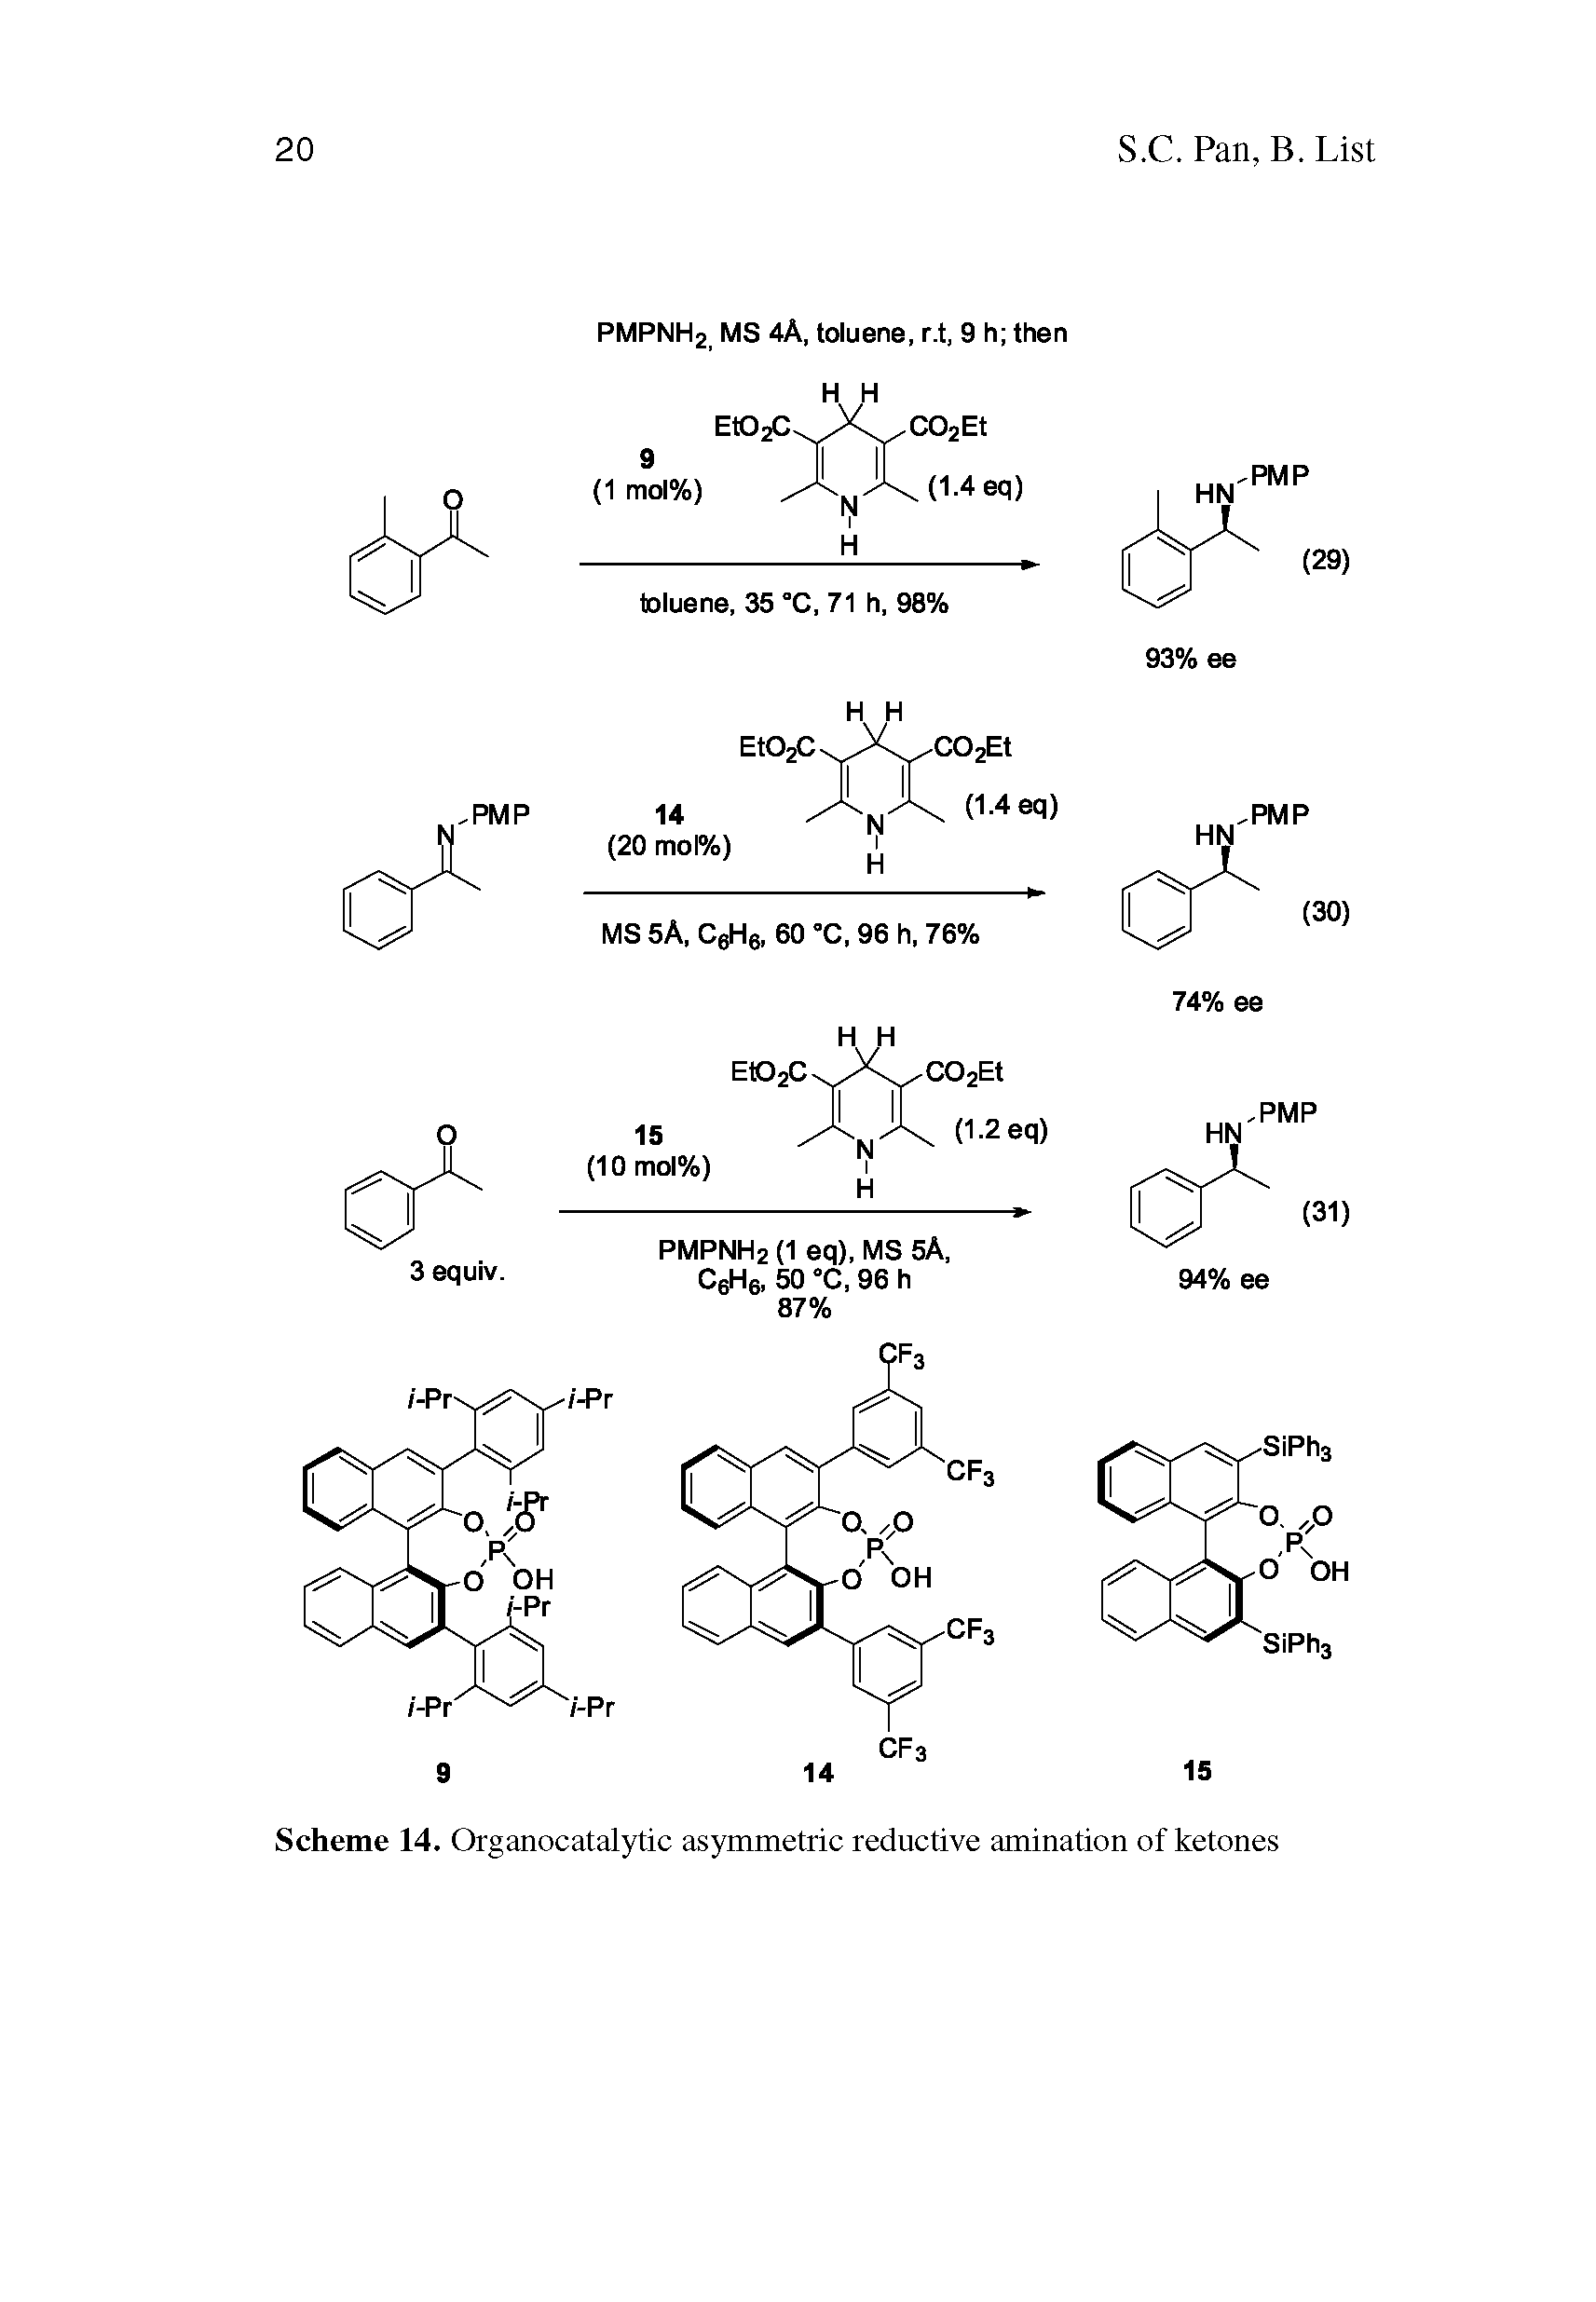 Scheme 14. Organocatalytic asymmetric reductive amination of ketones...